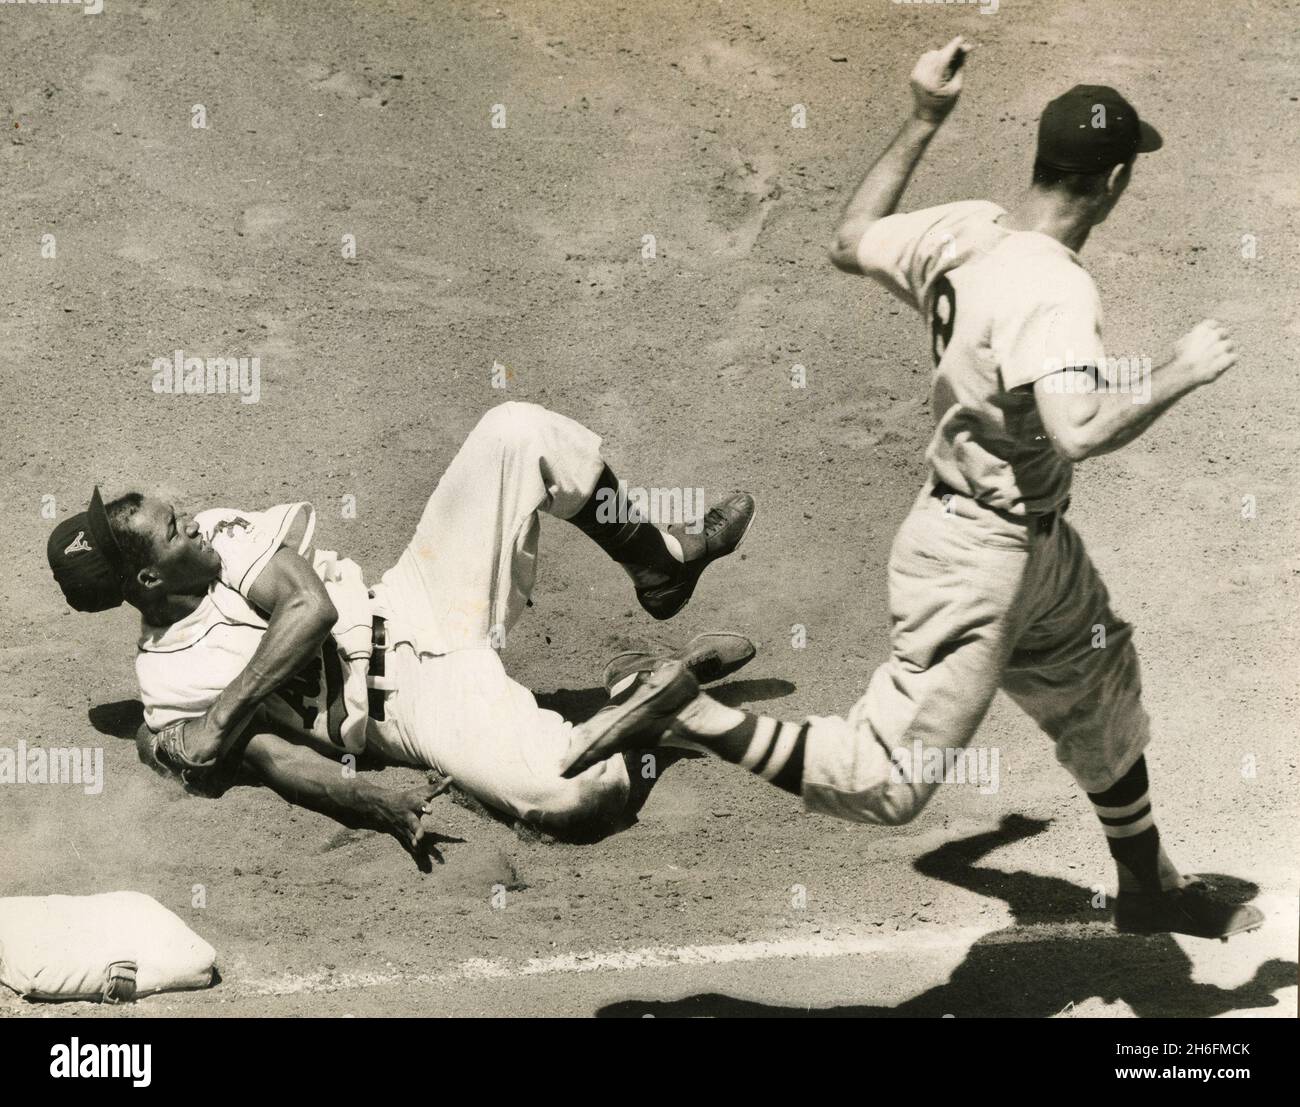 Willie Keeler, New York Highlanders, at bat and Lou Criger, Boston Red Sox,  catcher. Silk O'Loughlin umpire. Hilltop Park, New York 1908 Stock Photo -  Alamy